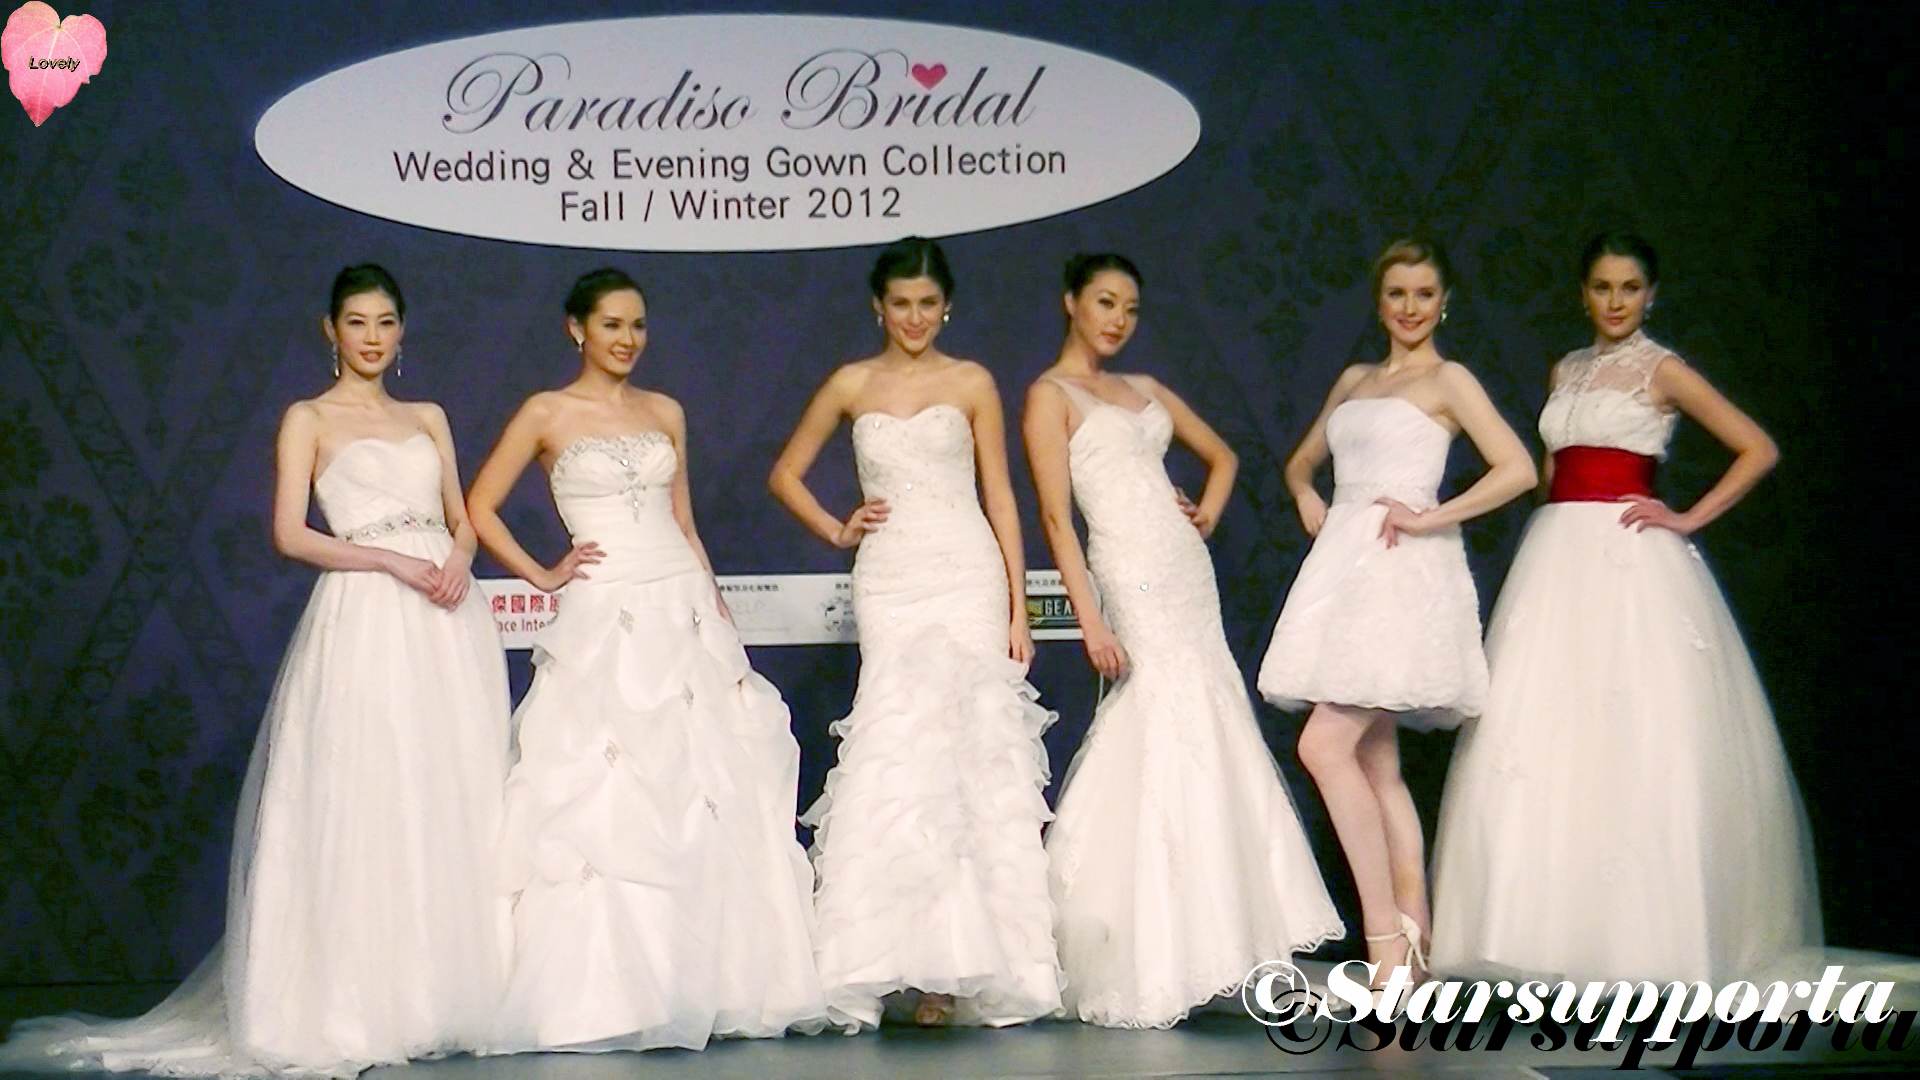 20120310 Hong Kong Wedding & Overseas Wedding Expo - Paradiso Bridal: Wedding & Evening Gown Collection Fall Winter 2012 @ 香港會議展覽中心 HKCEC (video)